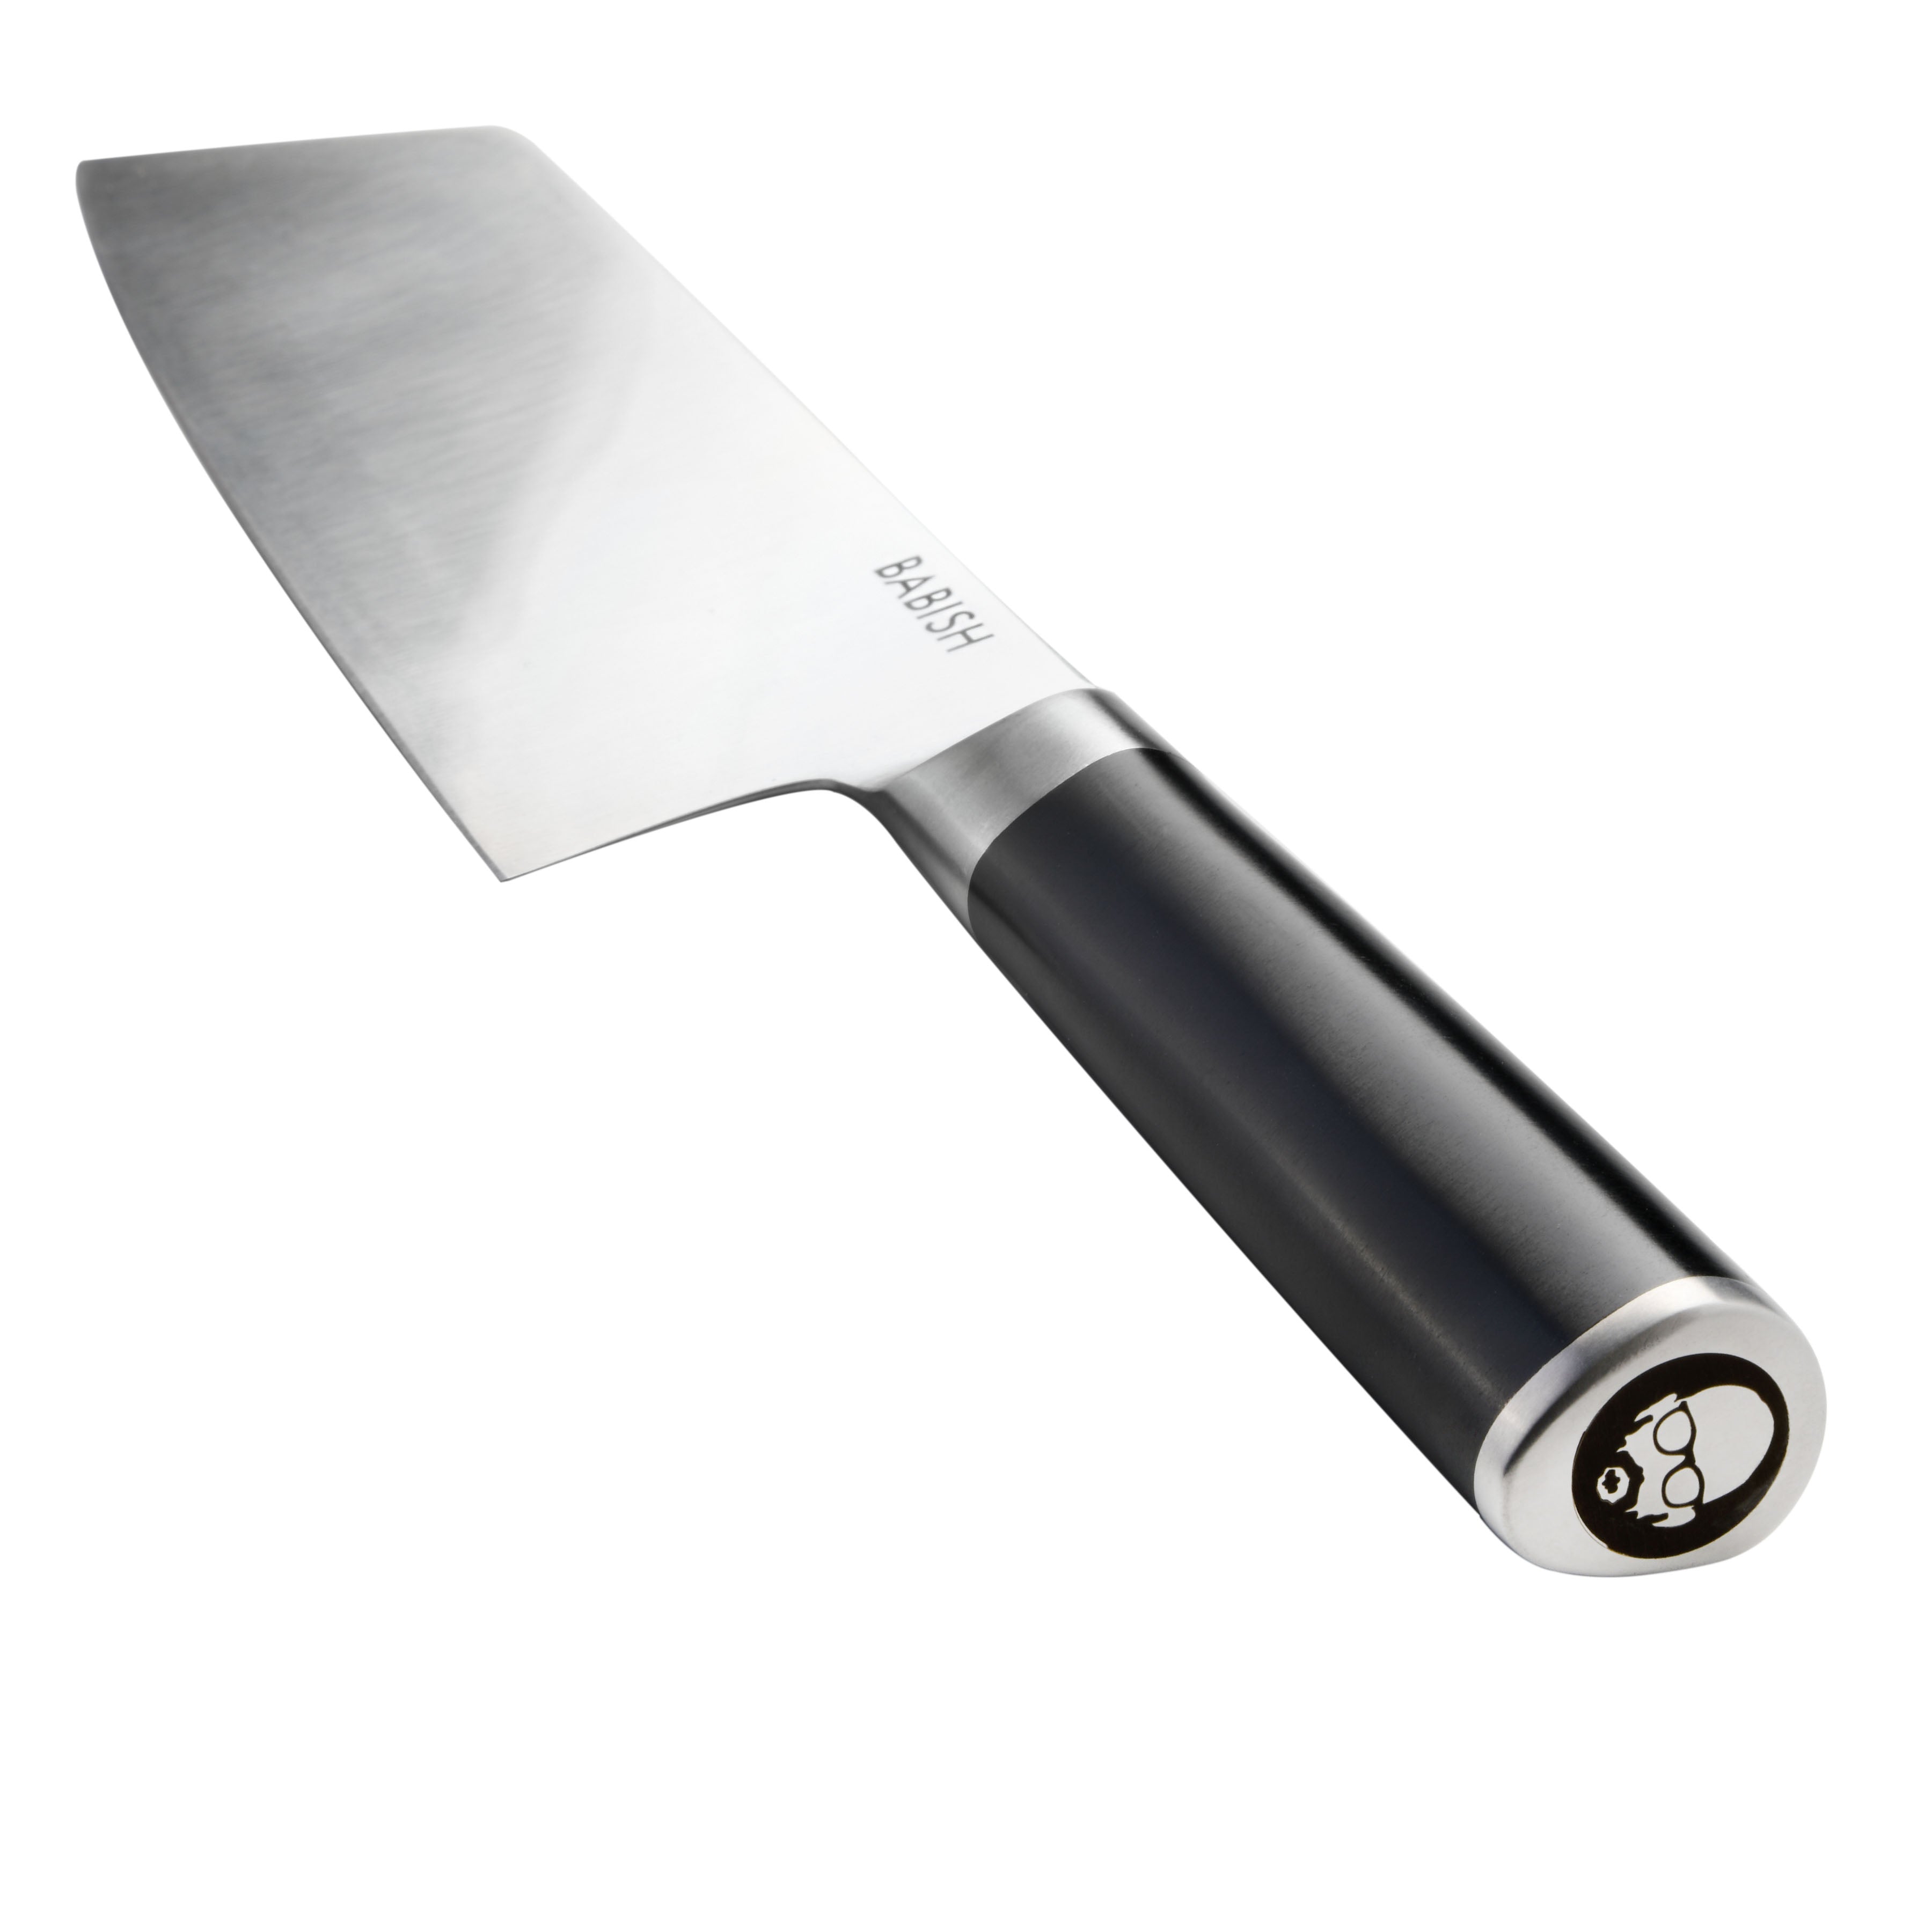 Babish High-Carbon 1.4116 German Steel 7.5" Clef Knife